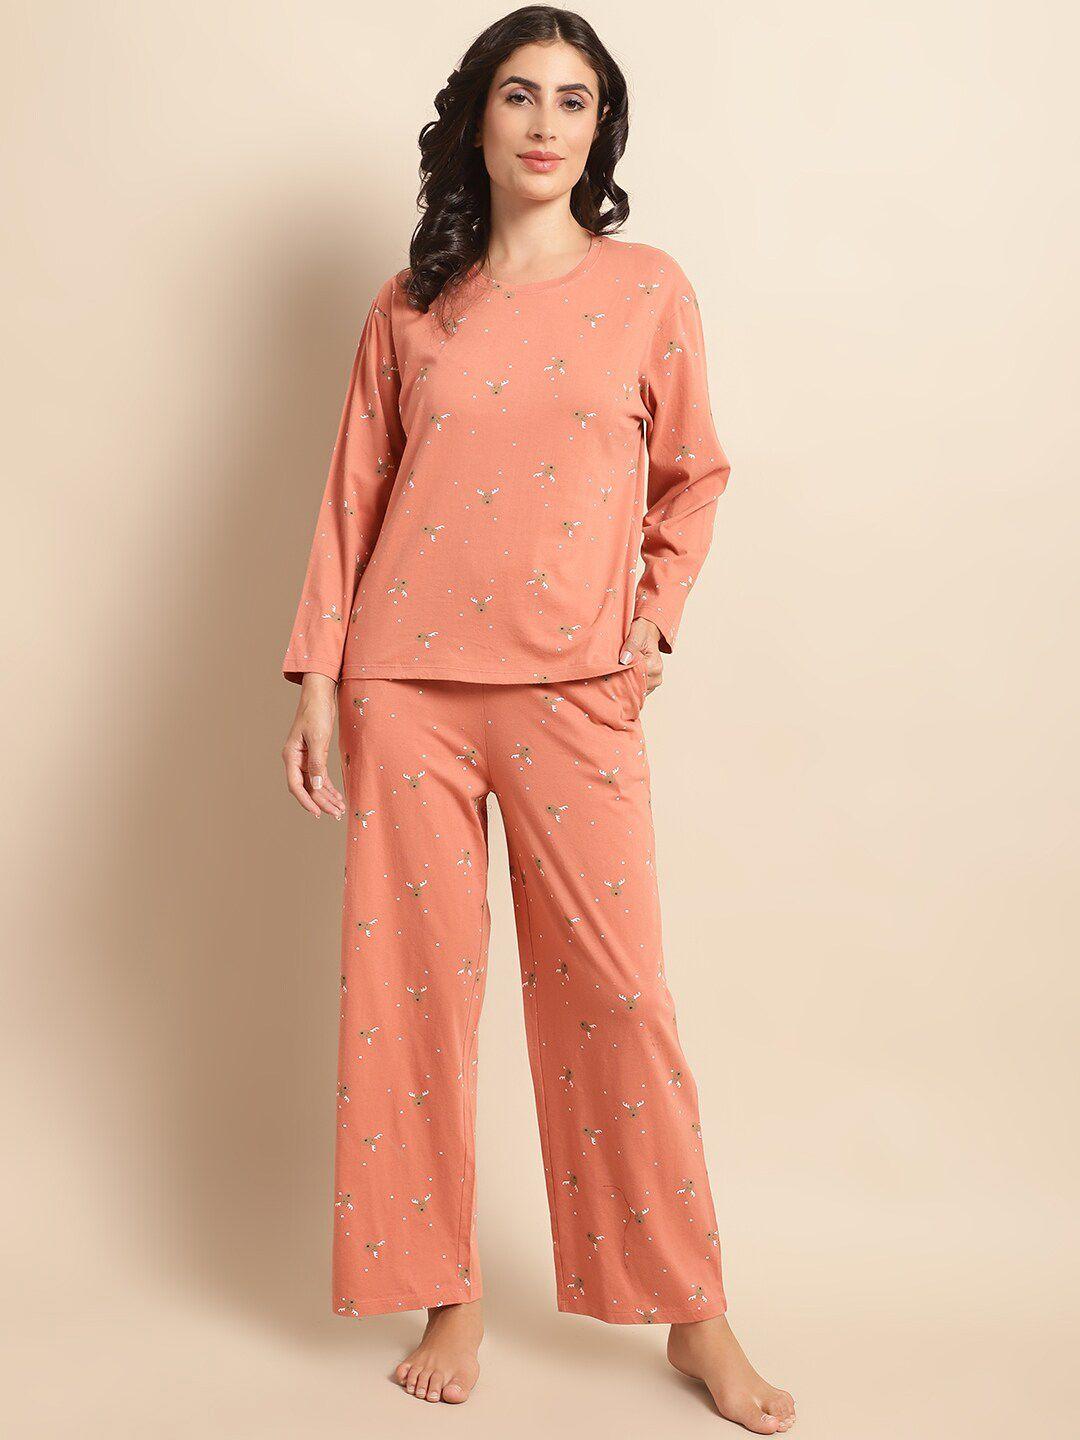 kanvin rust & brown conversational printed pure cotton tshirt & pyjamas